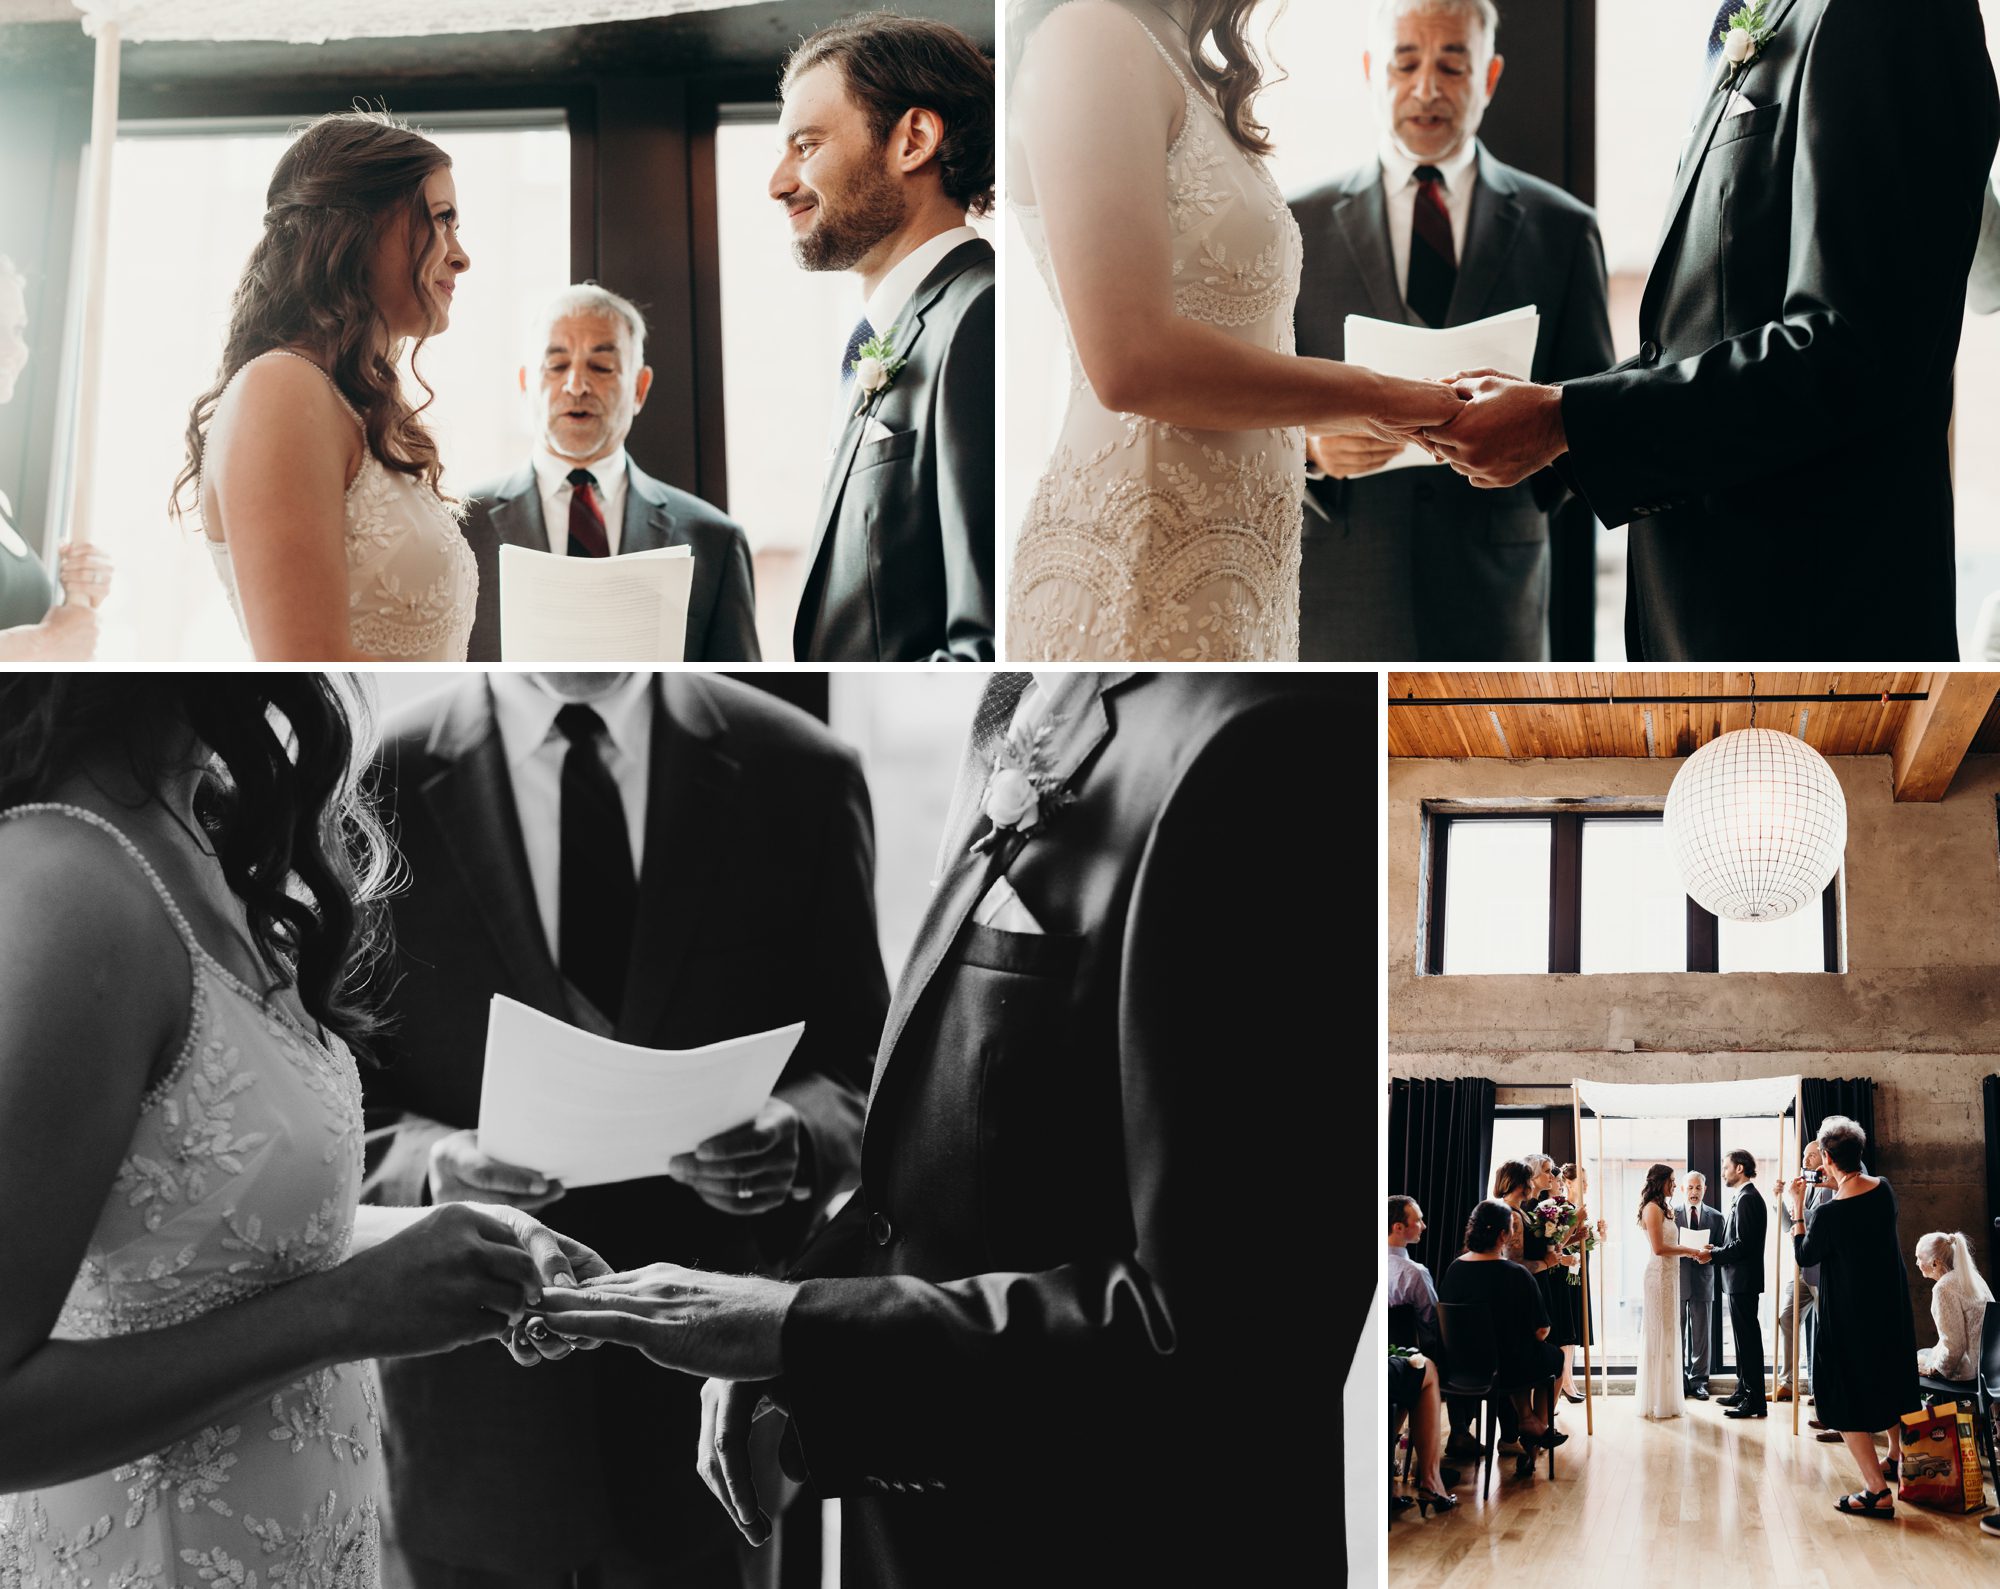 A beautiful wedding ceremony at Plaza del Toro. By Plaza del Toro wedding photographer Briana Morrison.